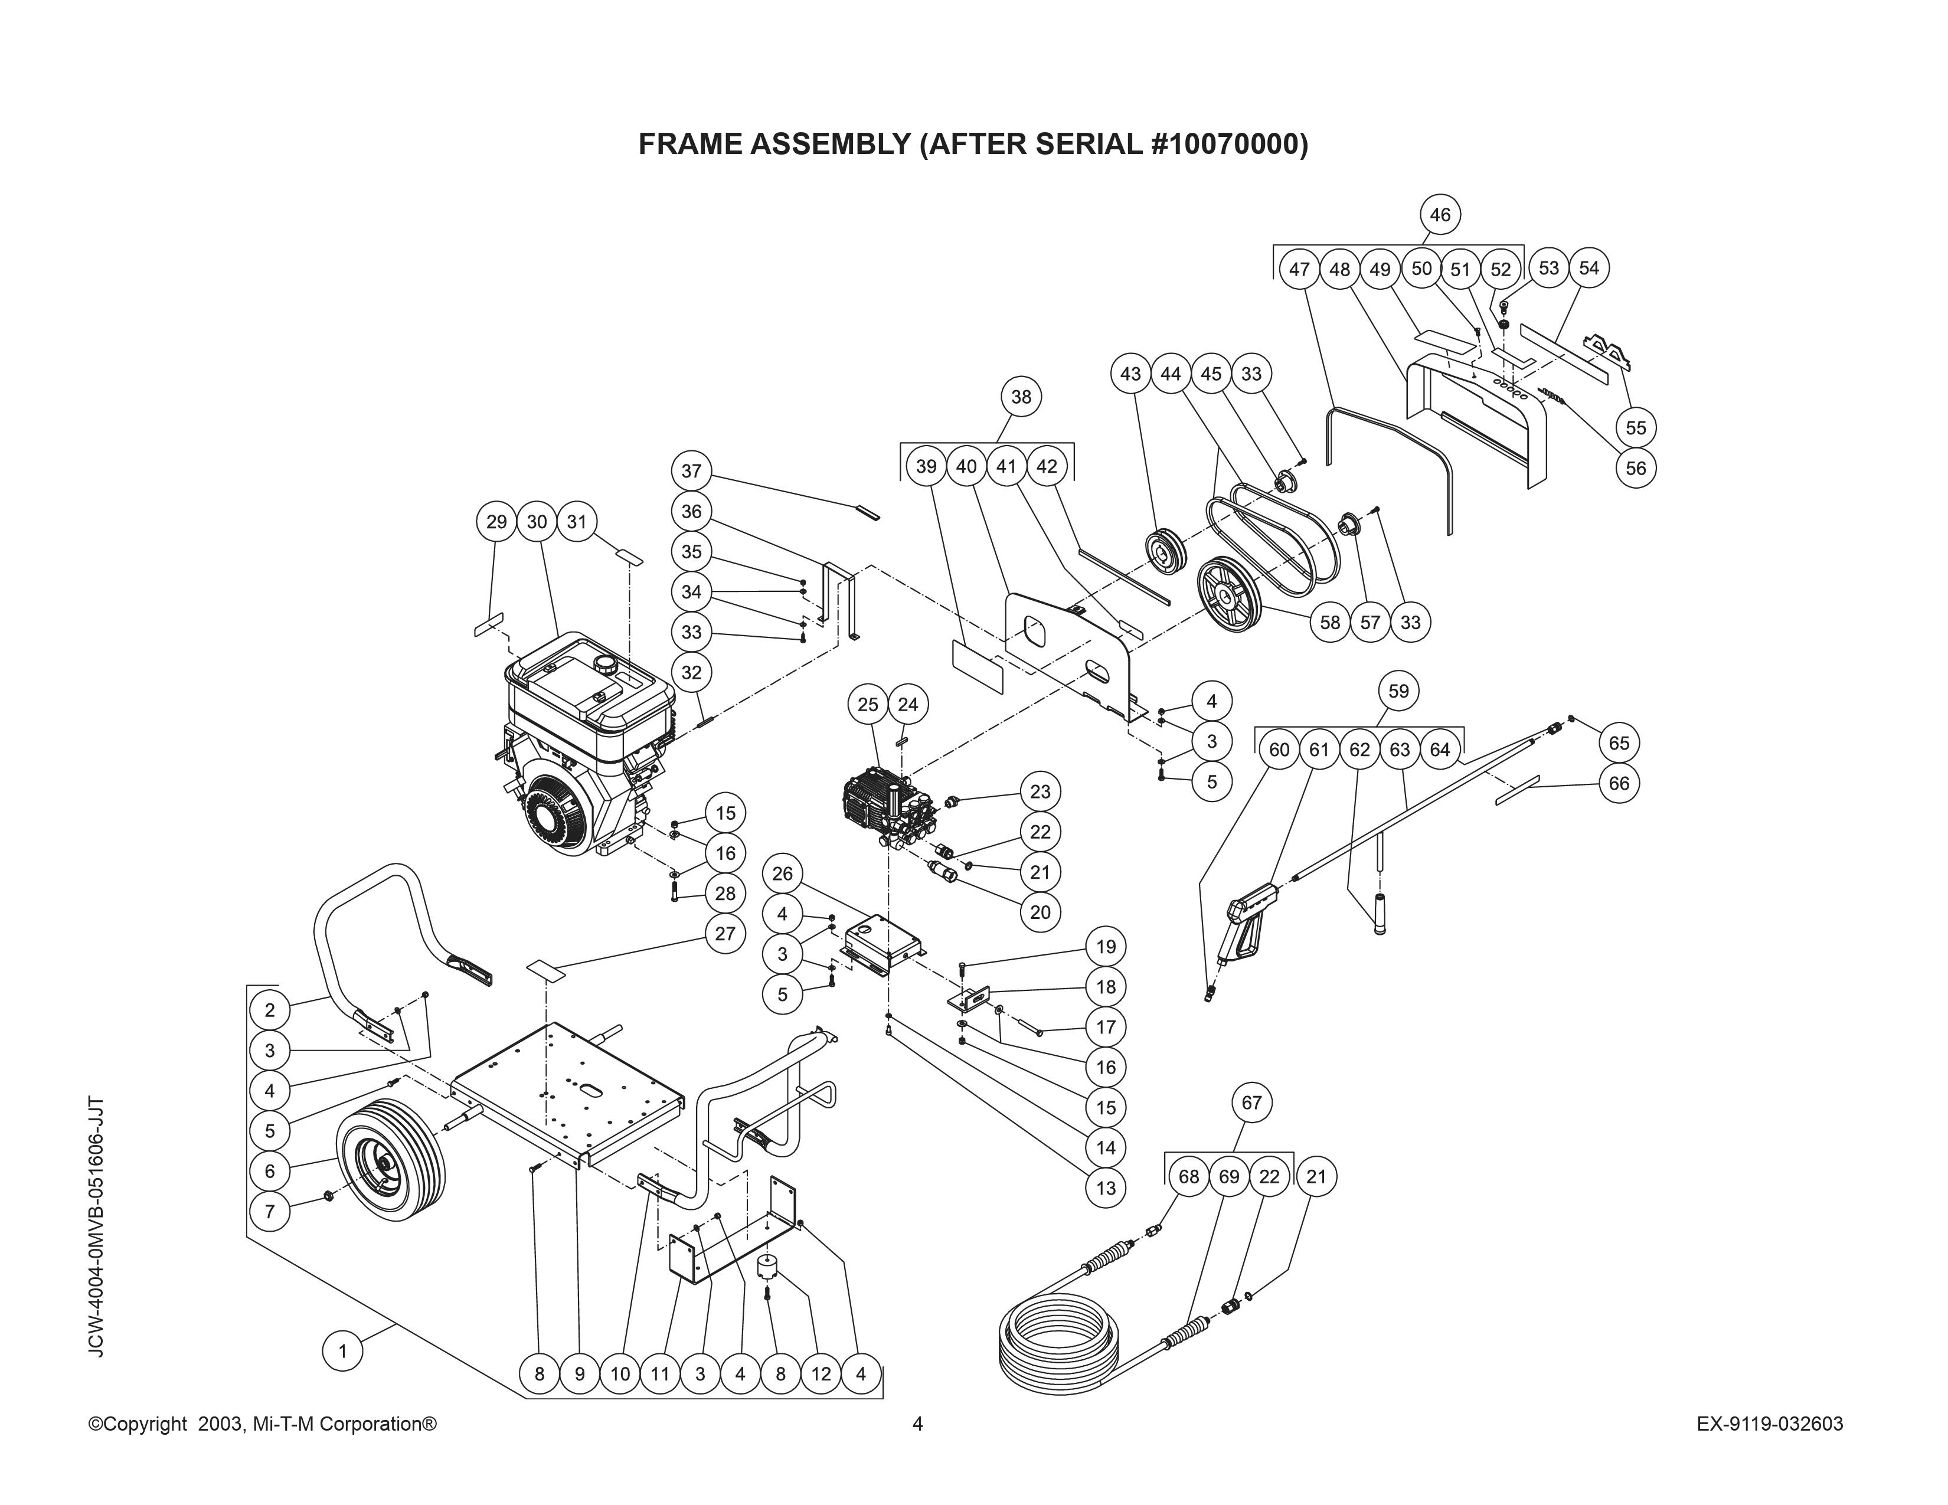 JCW-4004-0MVB Pressure Washer replacement Parts, Pumps, repair kits, breakdown & Owners Manual.